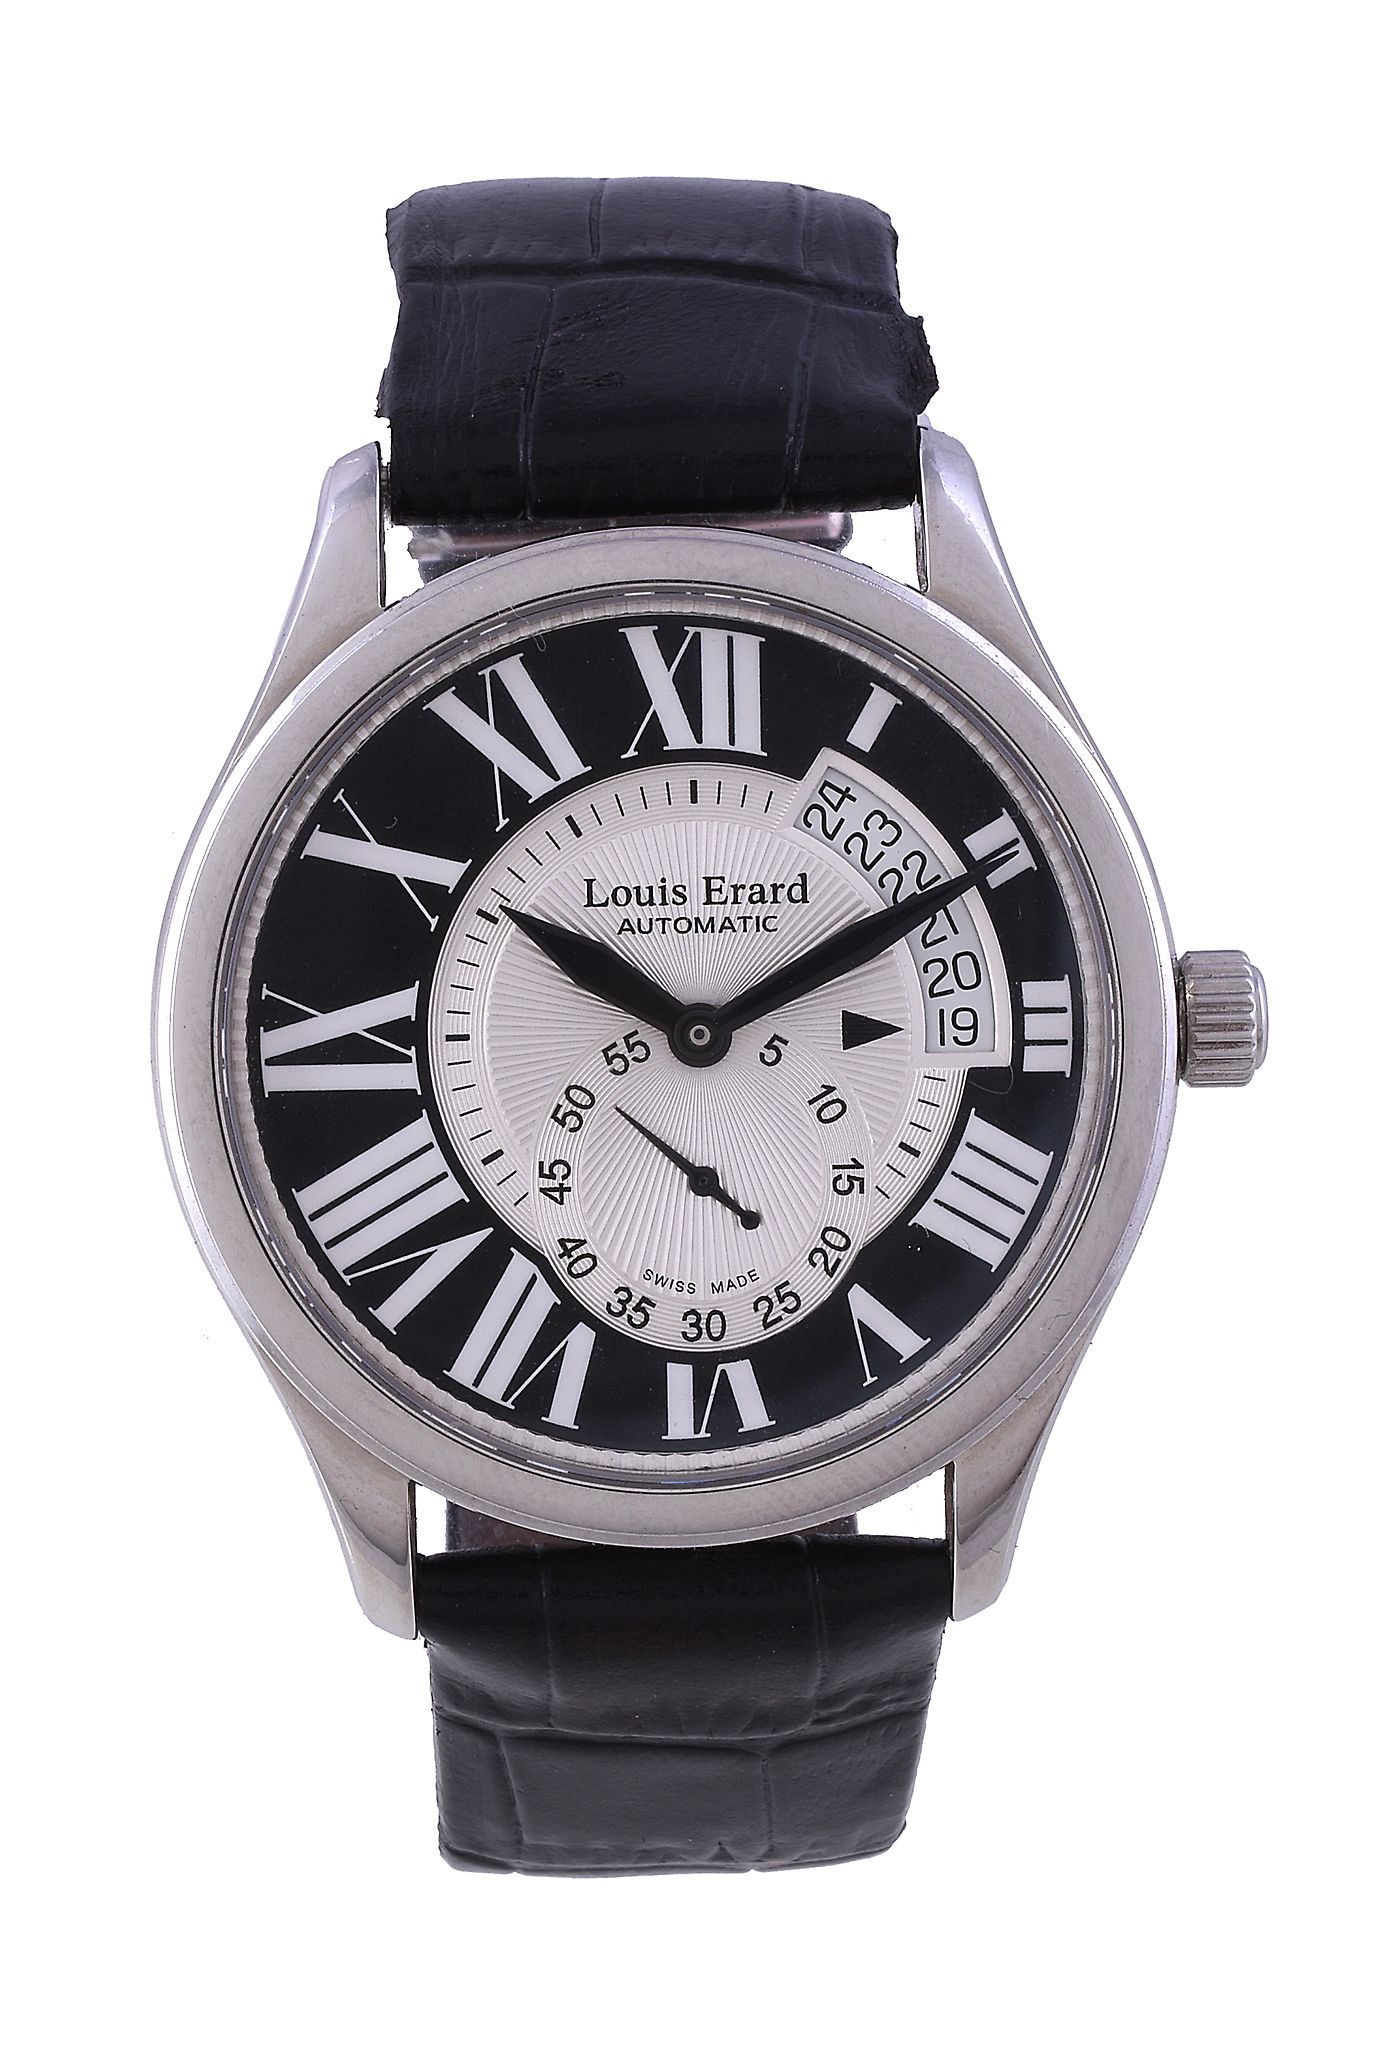 Louis Erard, L'asymetrique, ref. 92 300, a stainless steel wristwatch, circa 2006, automatic